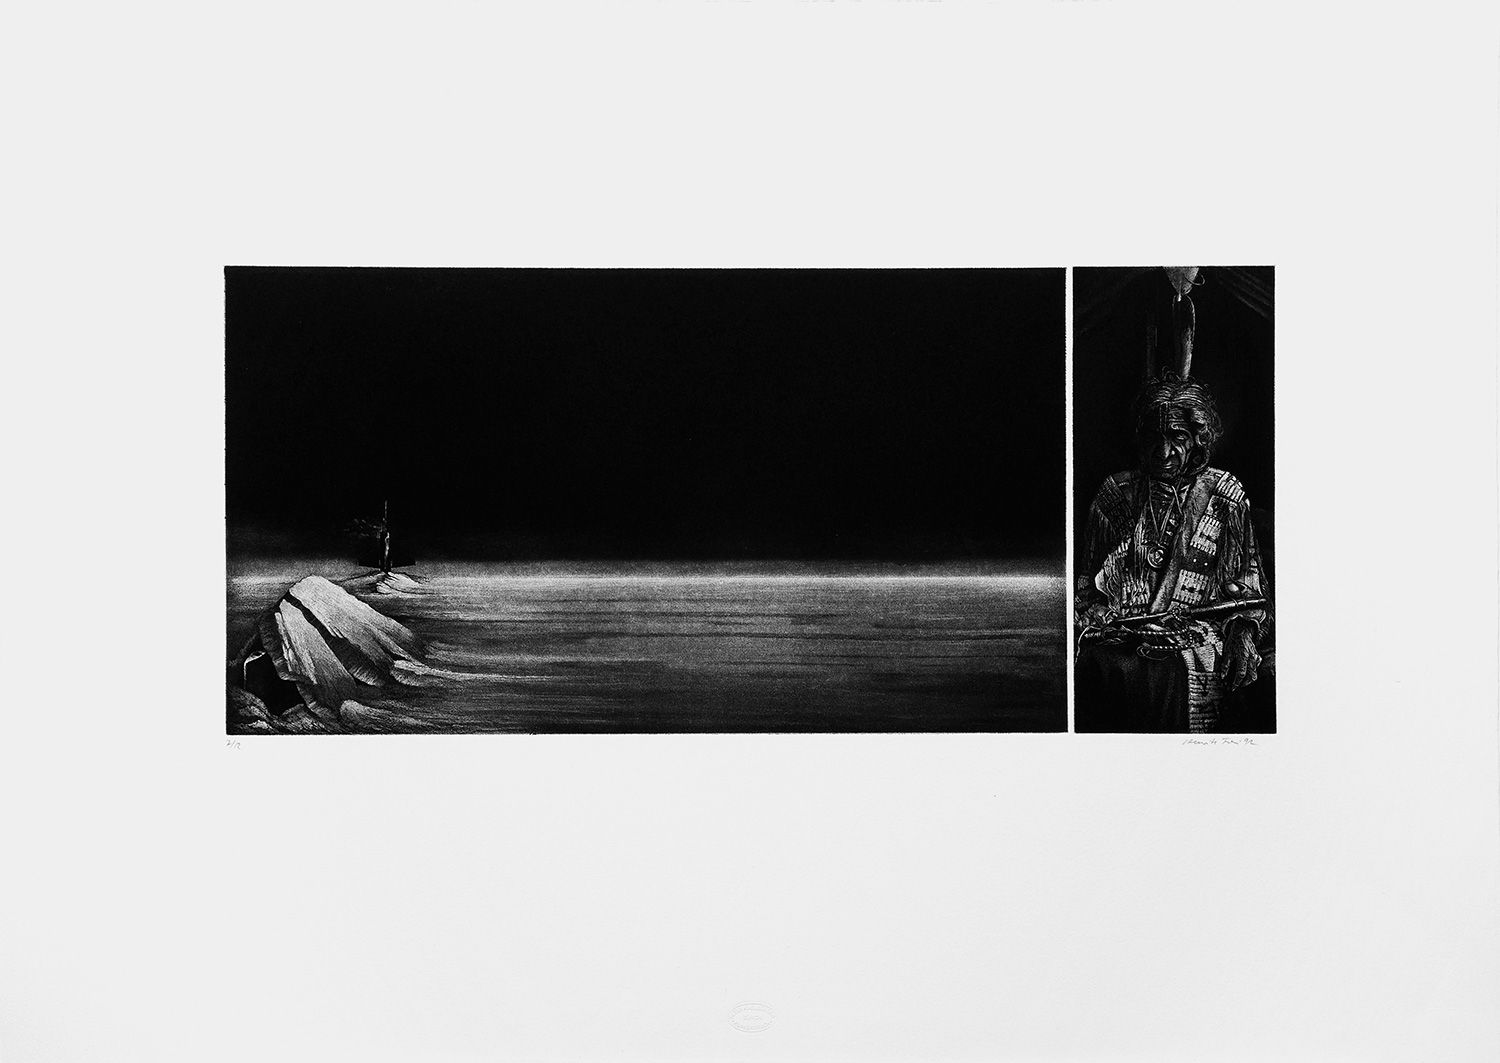 Endschaft | Shaft etching, vernis mou, aquatint and drypoint on wove papier (papier vélin) | 76 x 54 cm